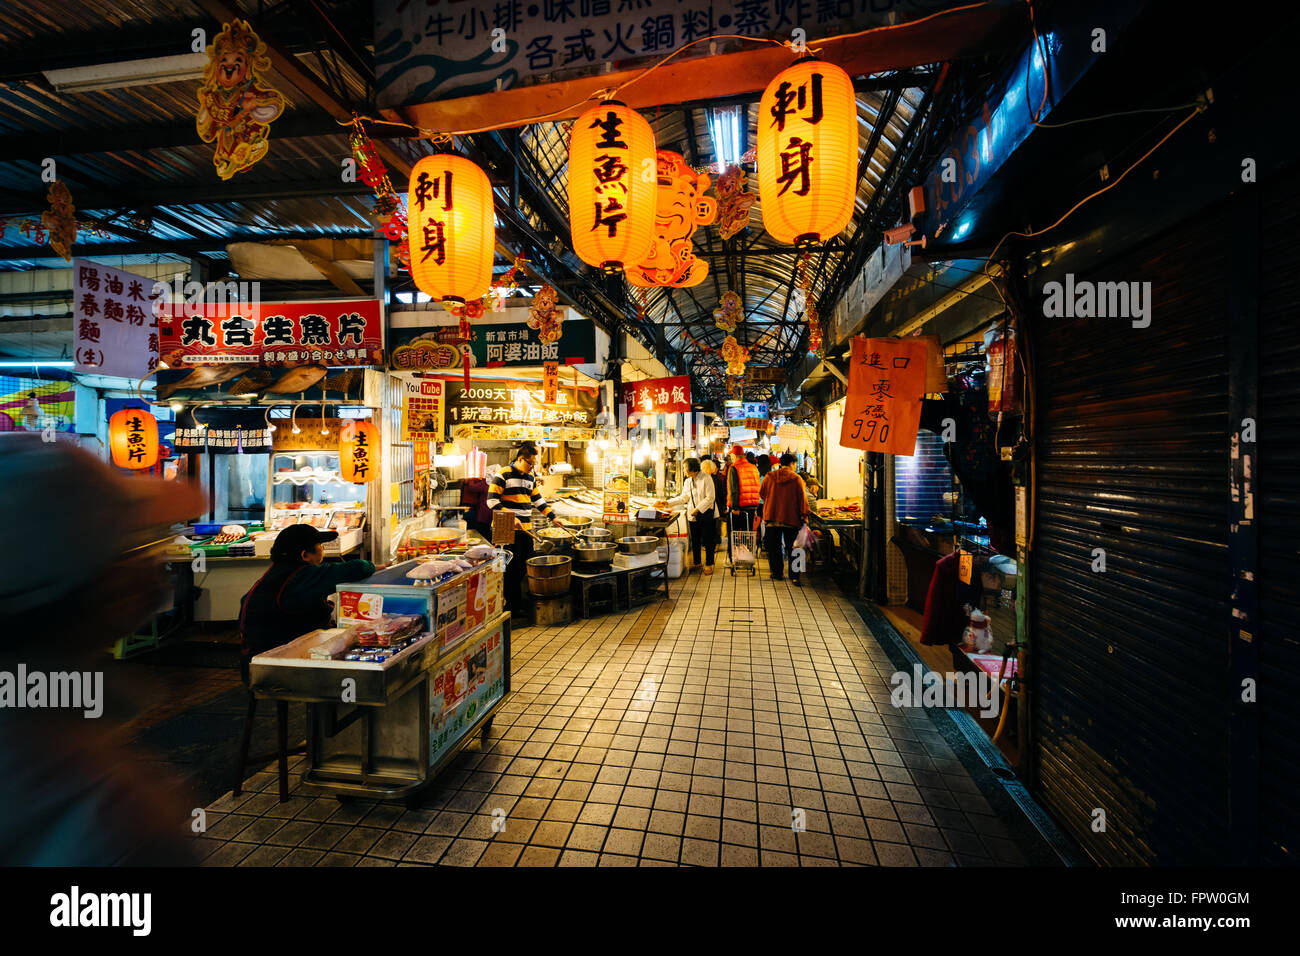 The Dongsanshui Street Market, in the Wanhua District, Taipei, Taiwan. Stock Photo